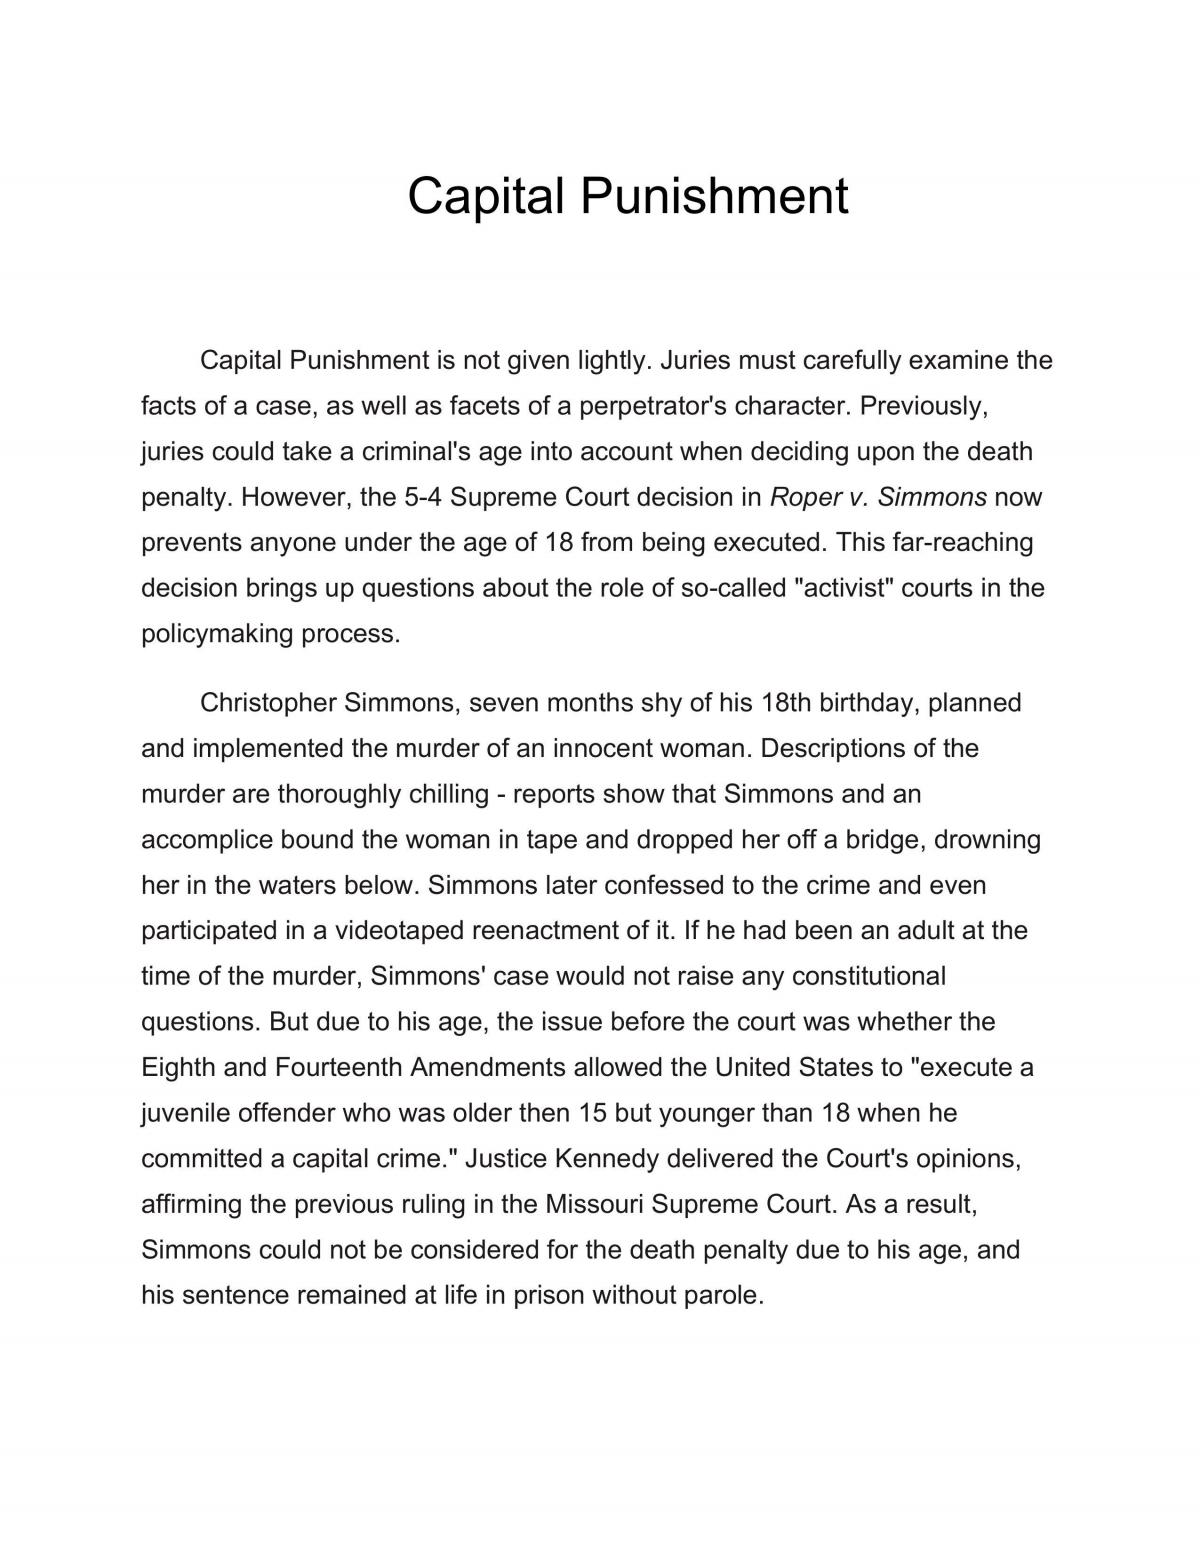 argumentative essay on capital punishment